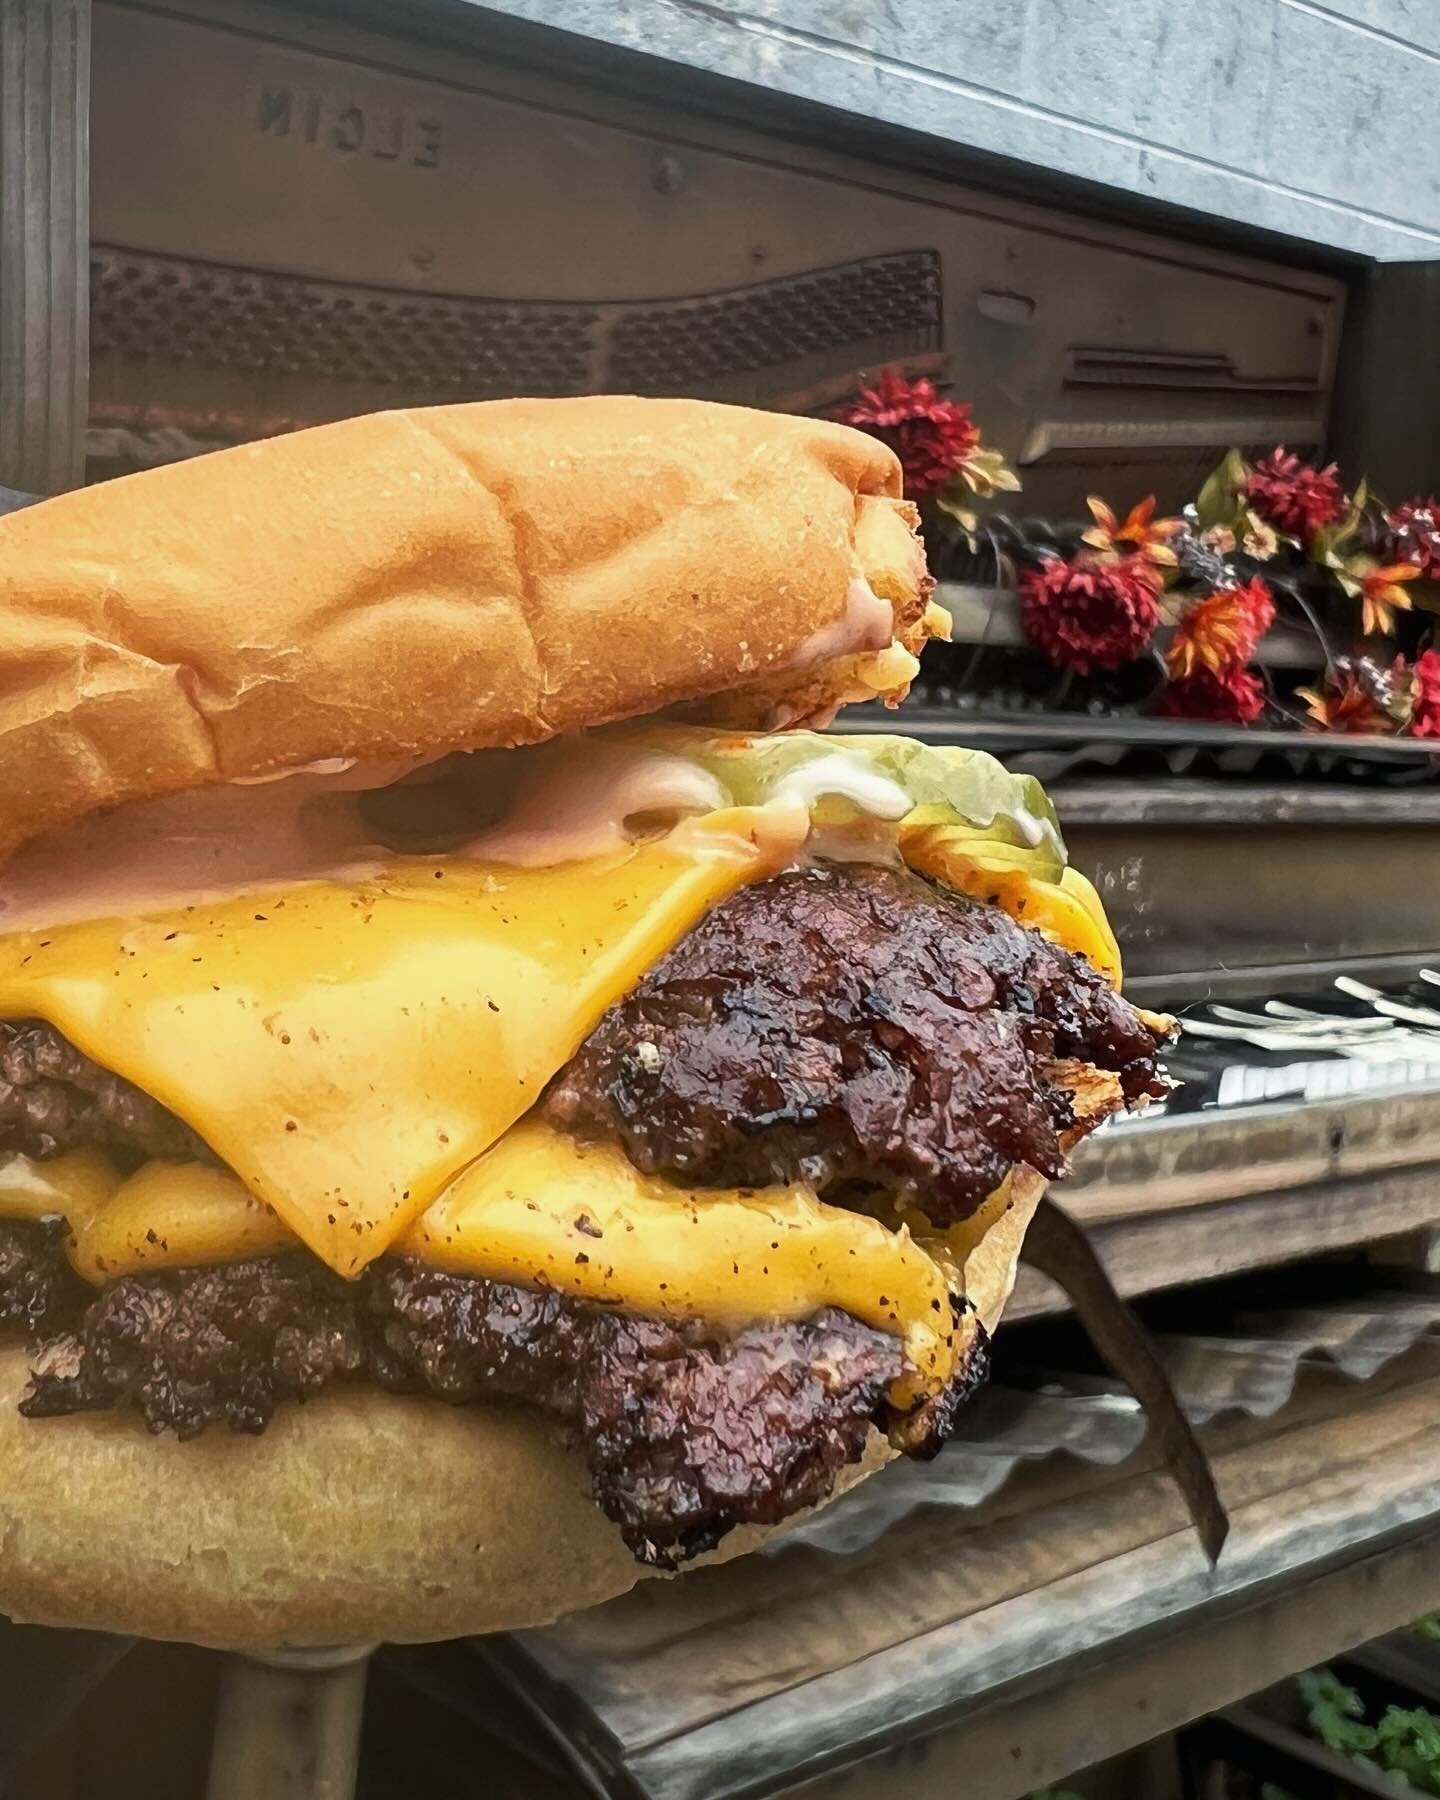 Isn&rsquo;t it lovely? 🥰 
.
.
. 
. 
#burgers #smashburger #burger #cheeseburger #nashville #nashvilleburger #nashvilleburgers #nashvillefood #nashvillefoodies #nashvilleeats #eatlocal #onionburger #grilledonionburger #oklahomaburger